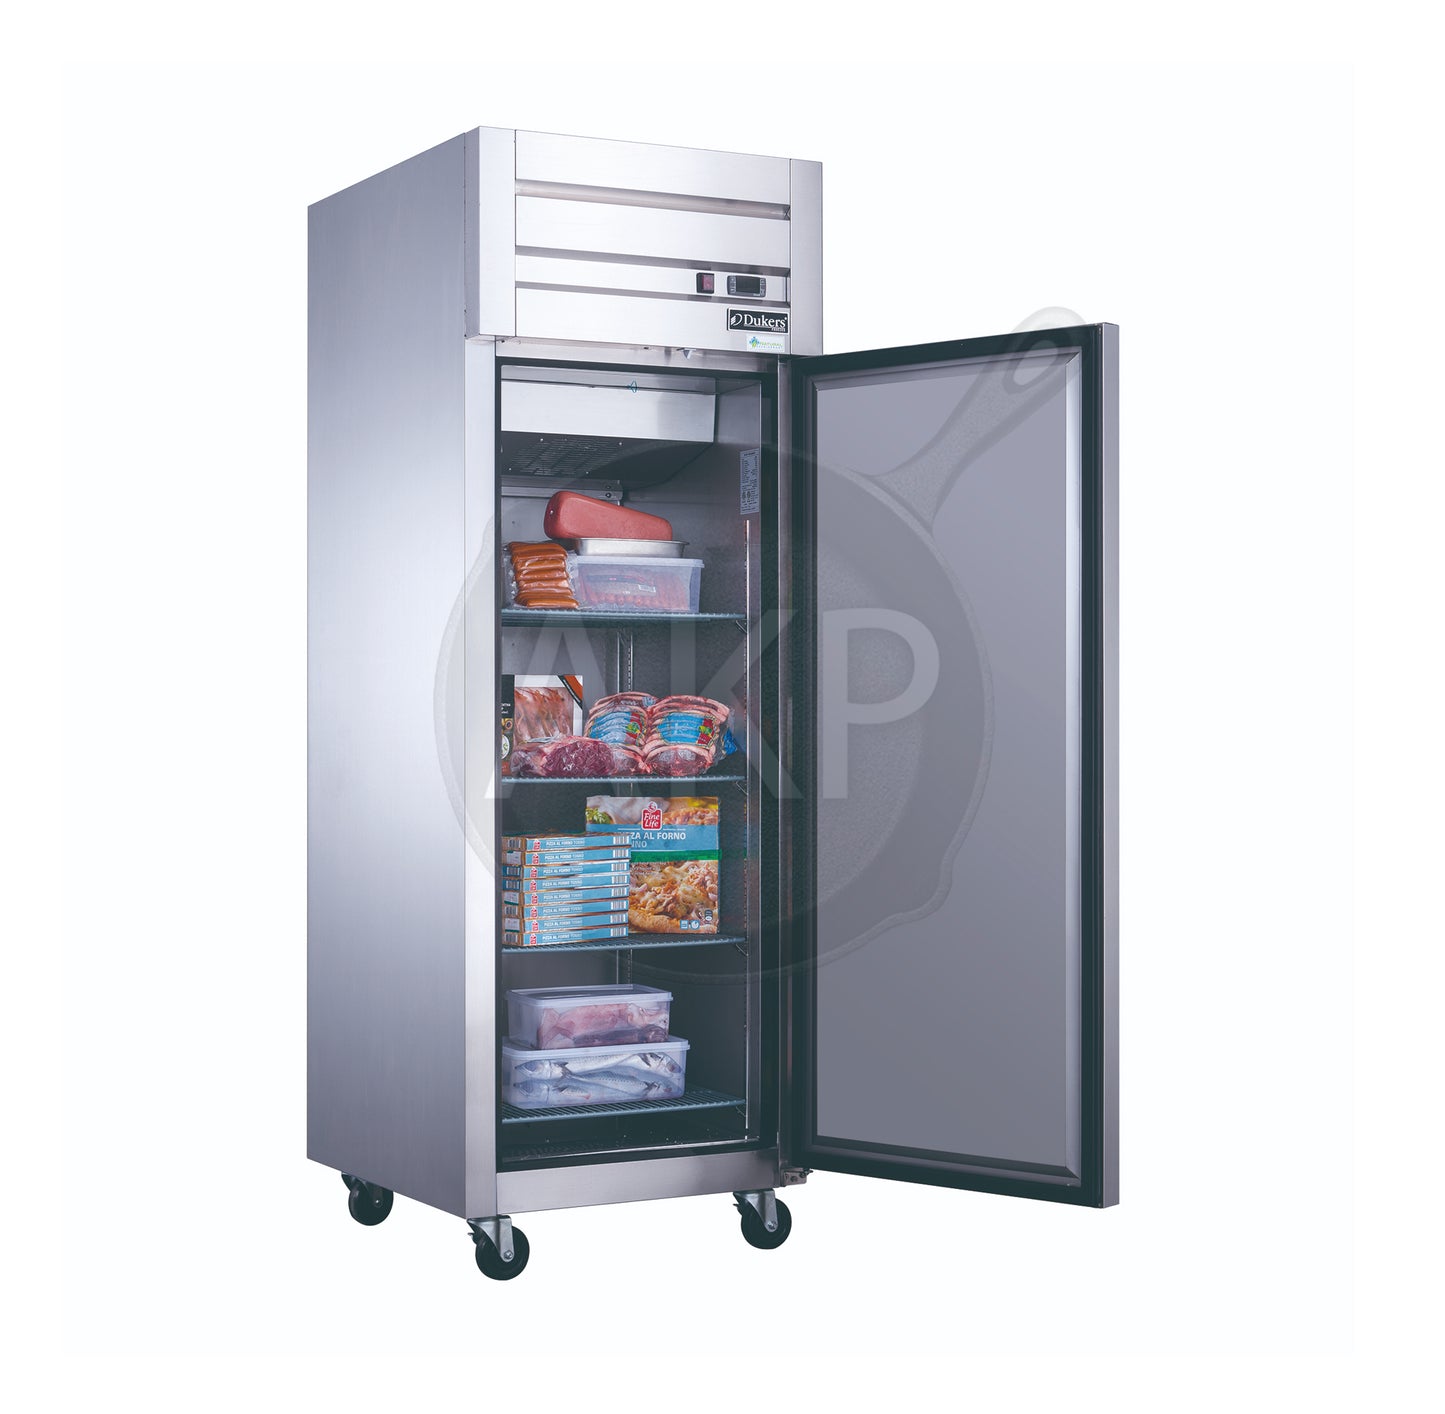 Dukersusa - D28AR Commercial Single Door Top Mount Refrigerator in Stainless Steel